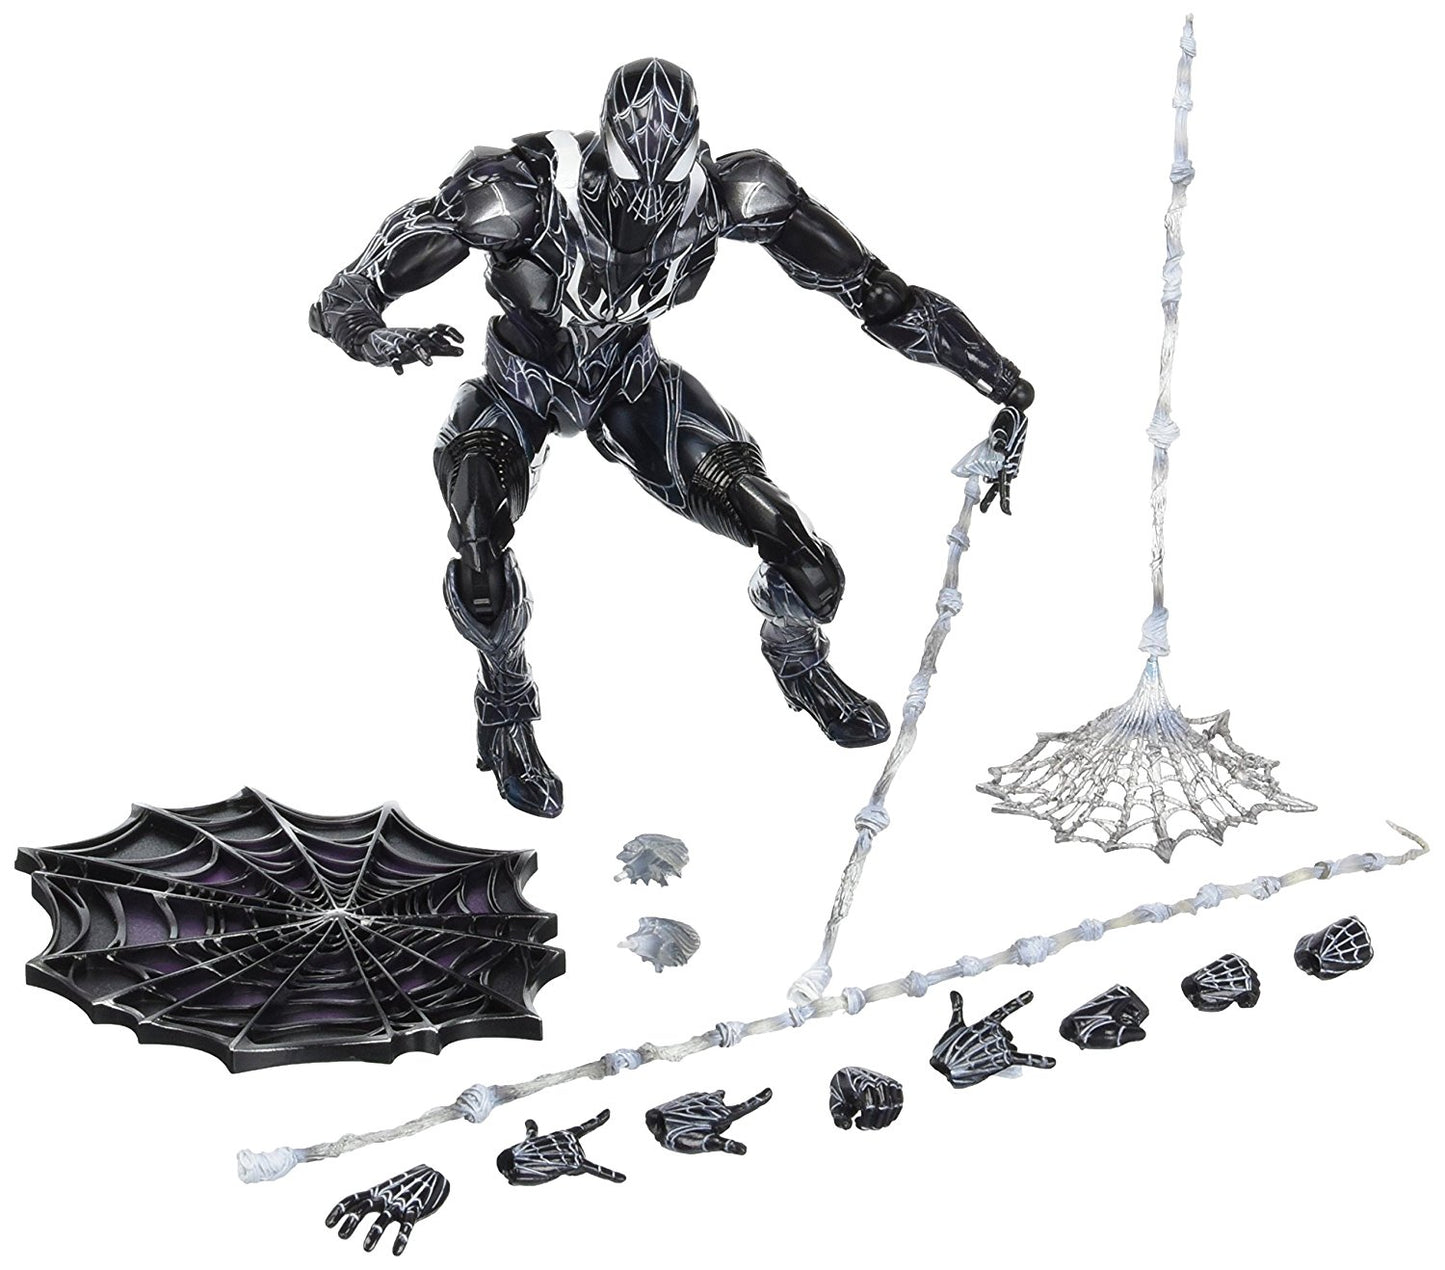 Marvel Universe Spider-Man Black Variant Play Arts Kai Action Figure